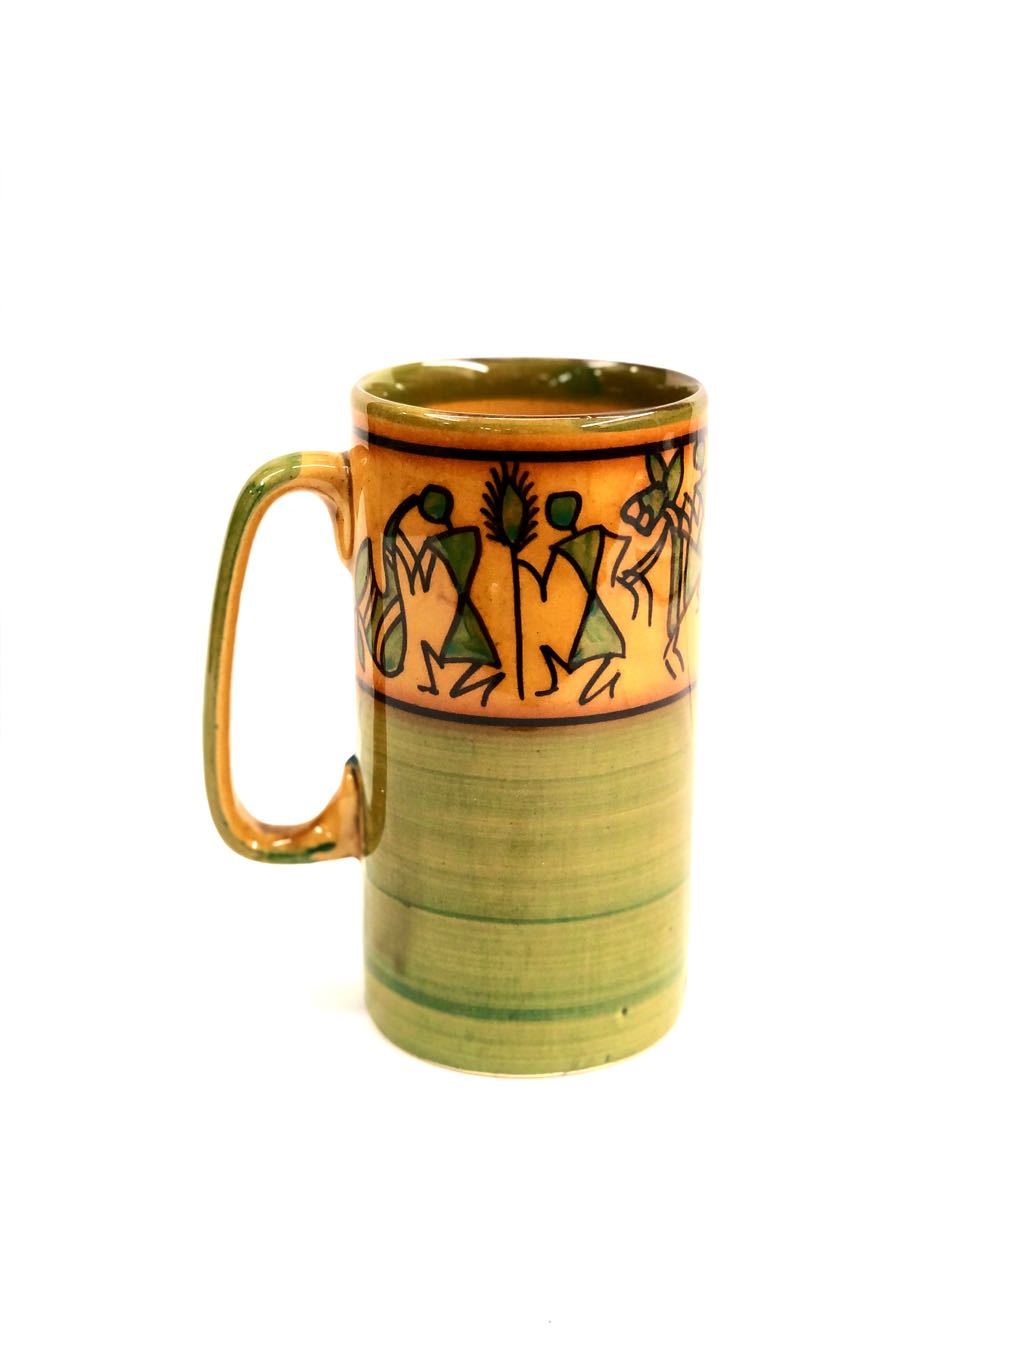 Ceramic Warli Painted Mugs Glossy & Beautiful For Beverages Tamrapatra